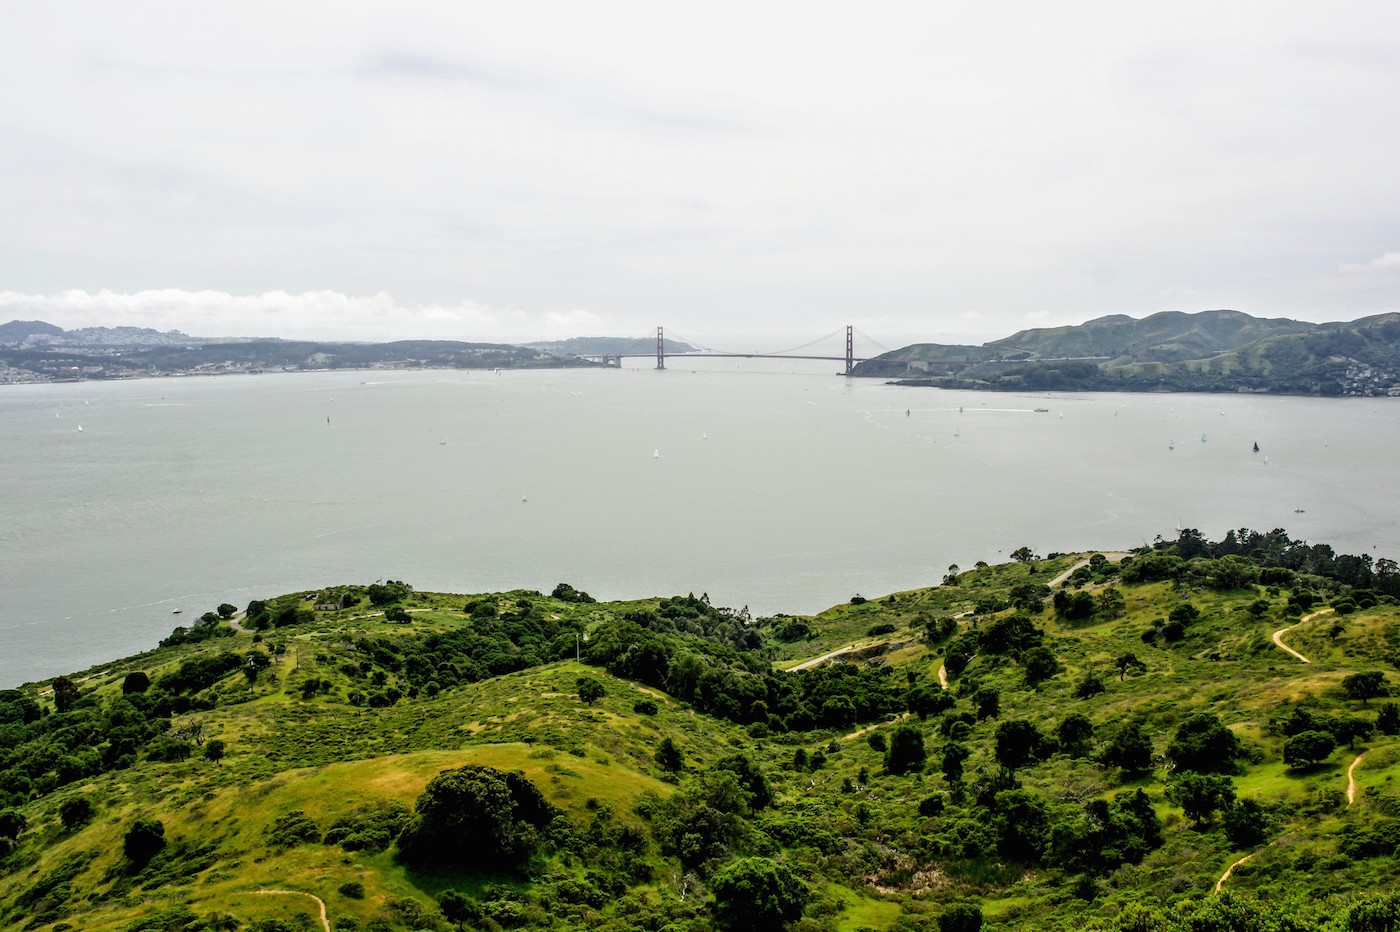 Omgeving San Francisco Angel Island - Golden Gate Bridge